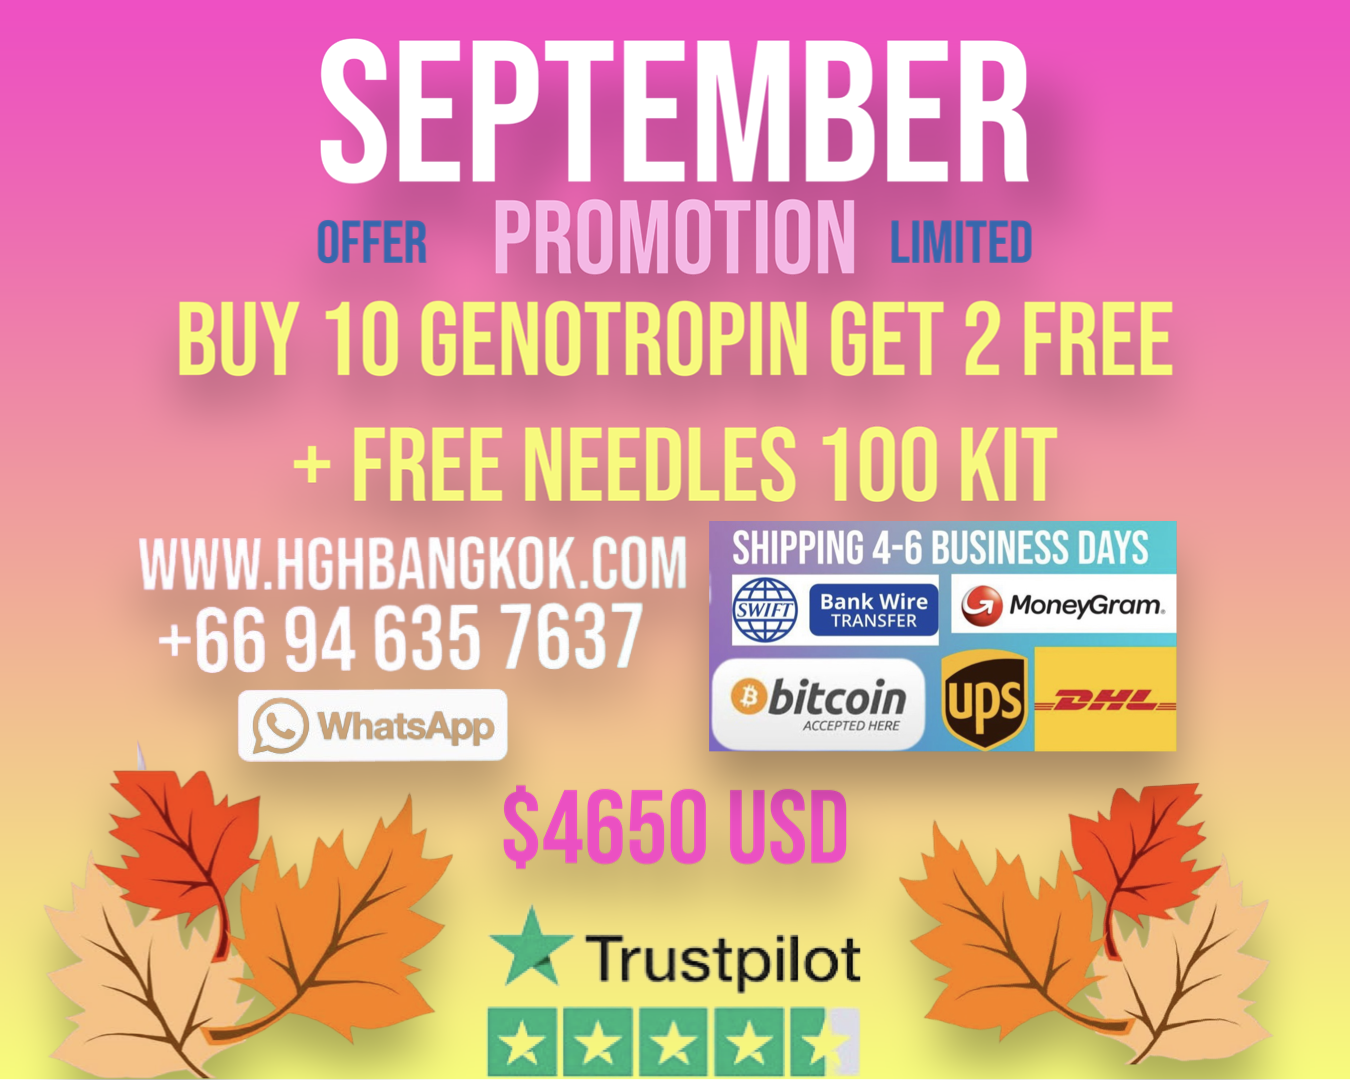 September promotion from HGHBangkok.com